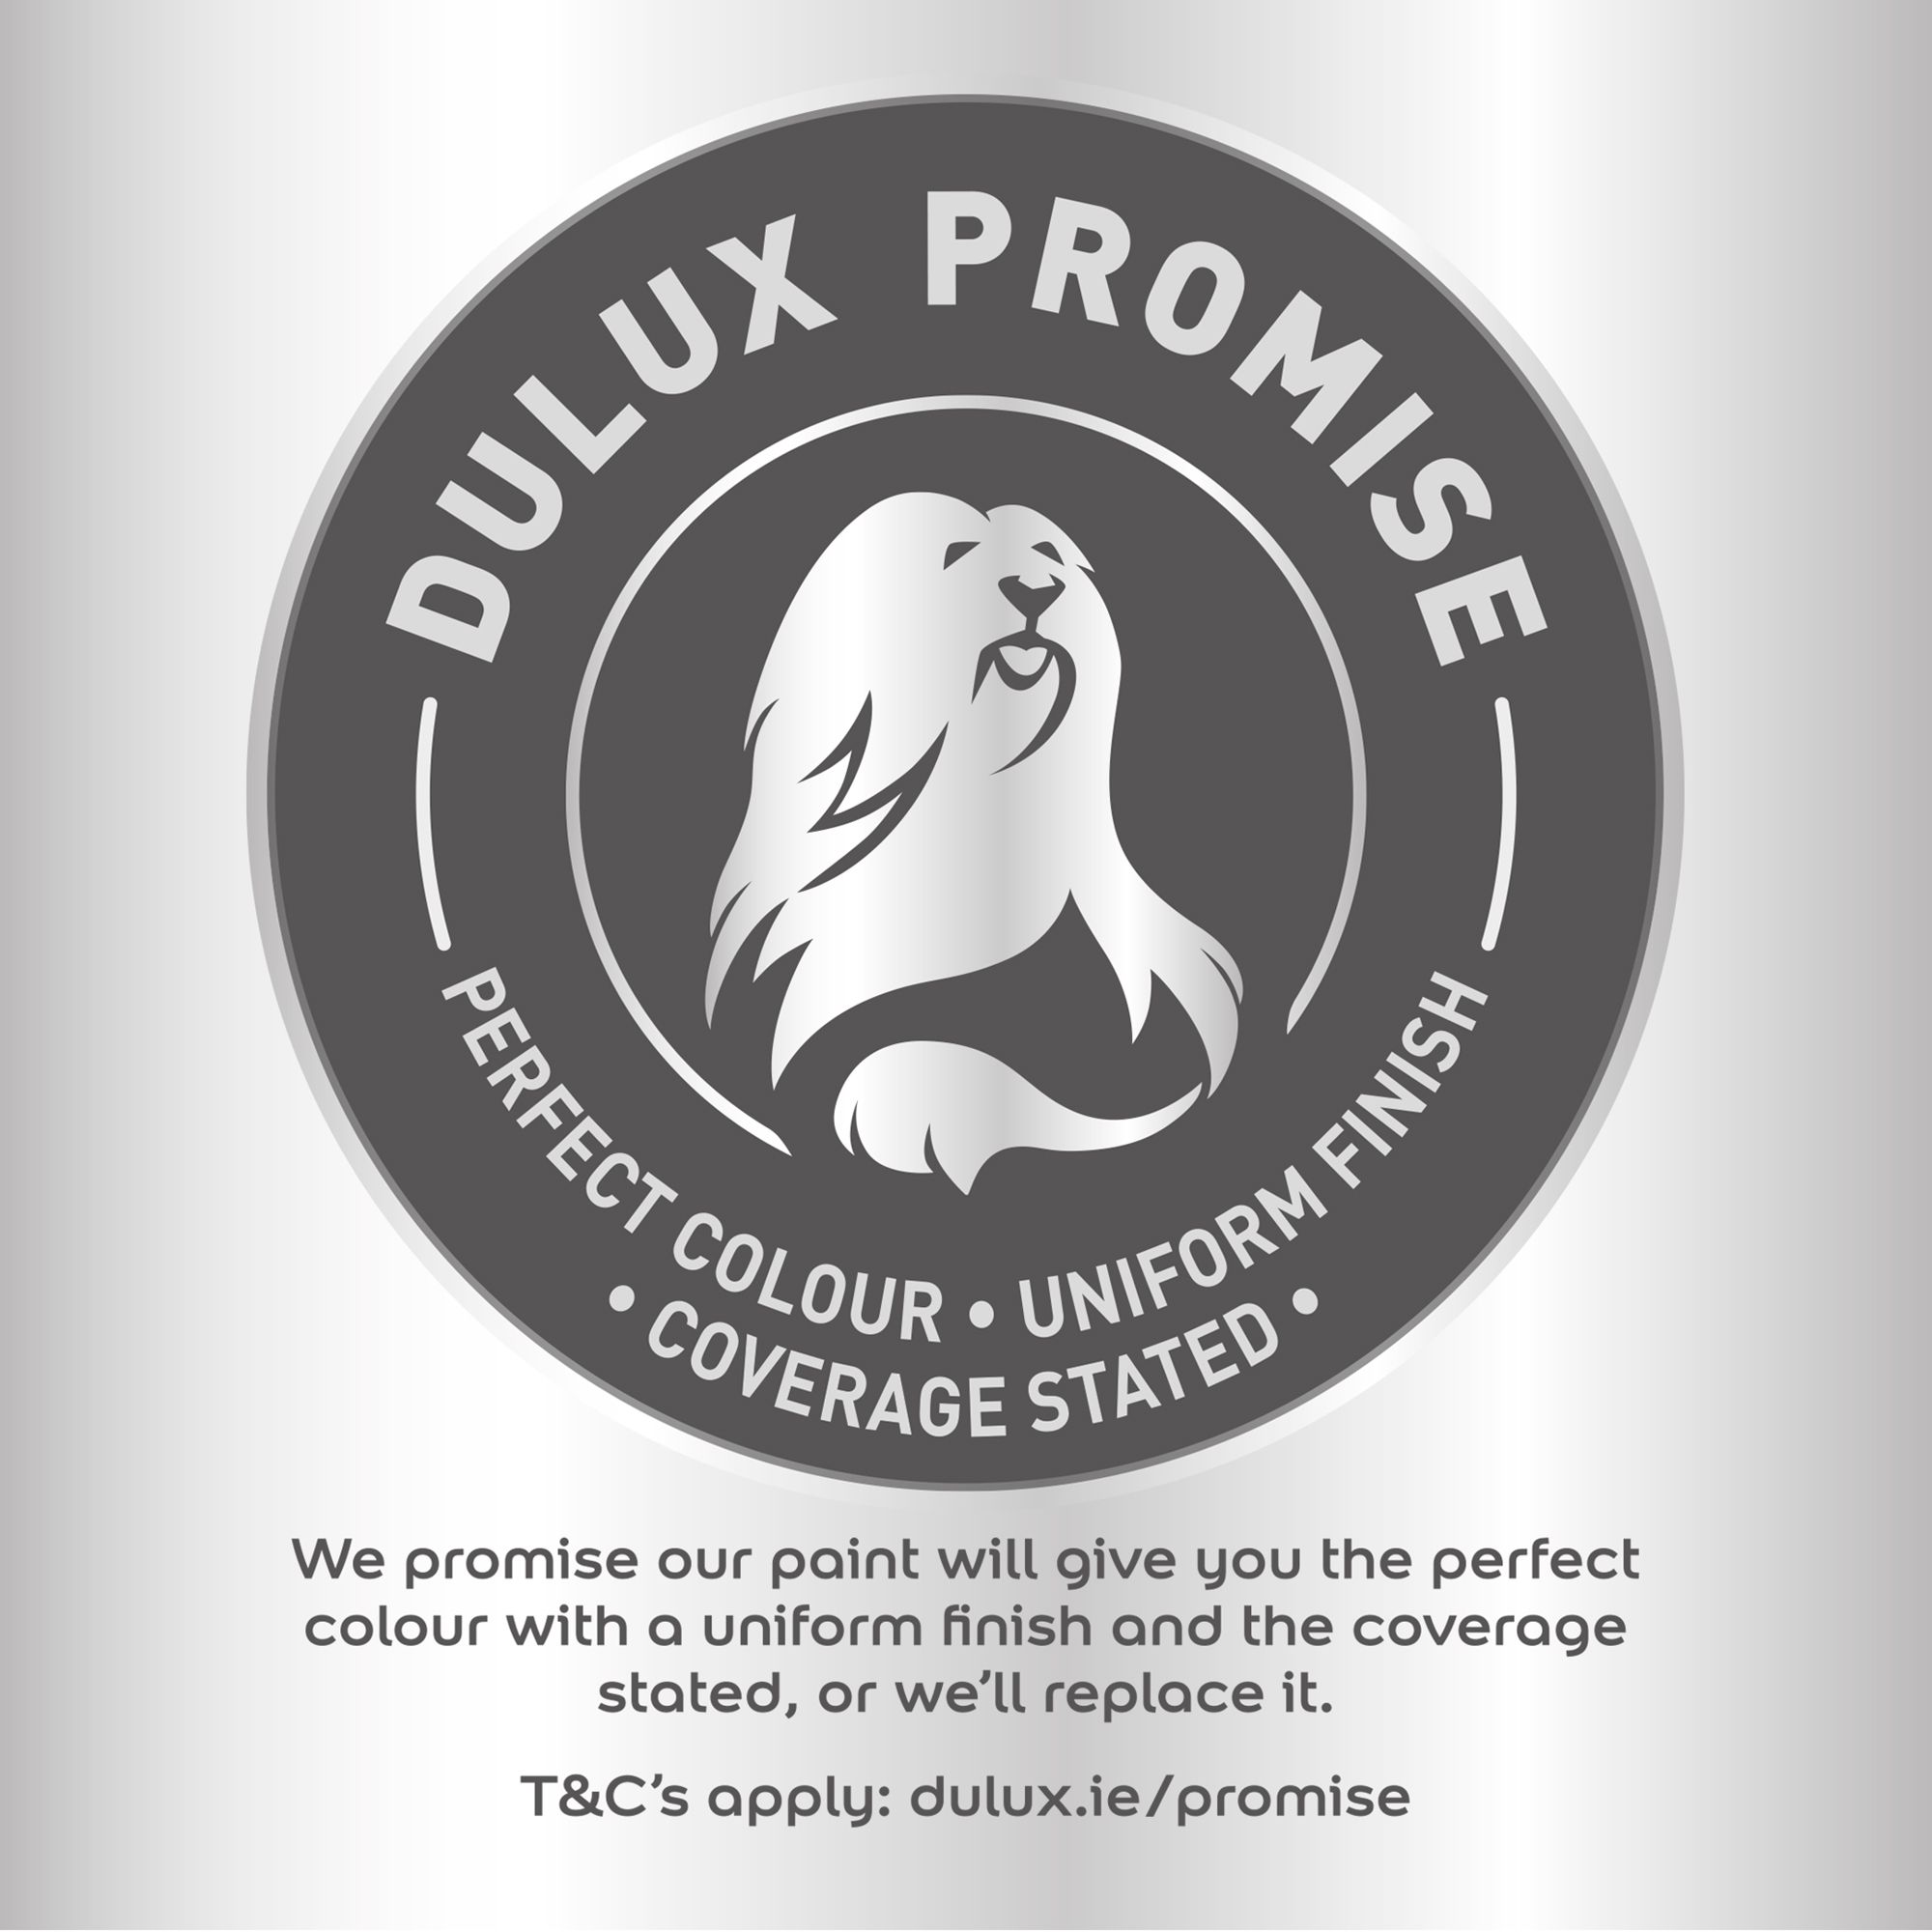 Dulux Vintage cream Vinyl matt Emulsion paint, 10L